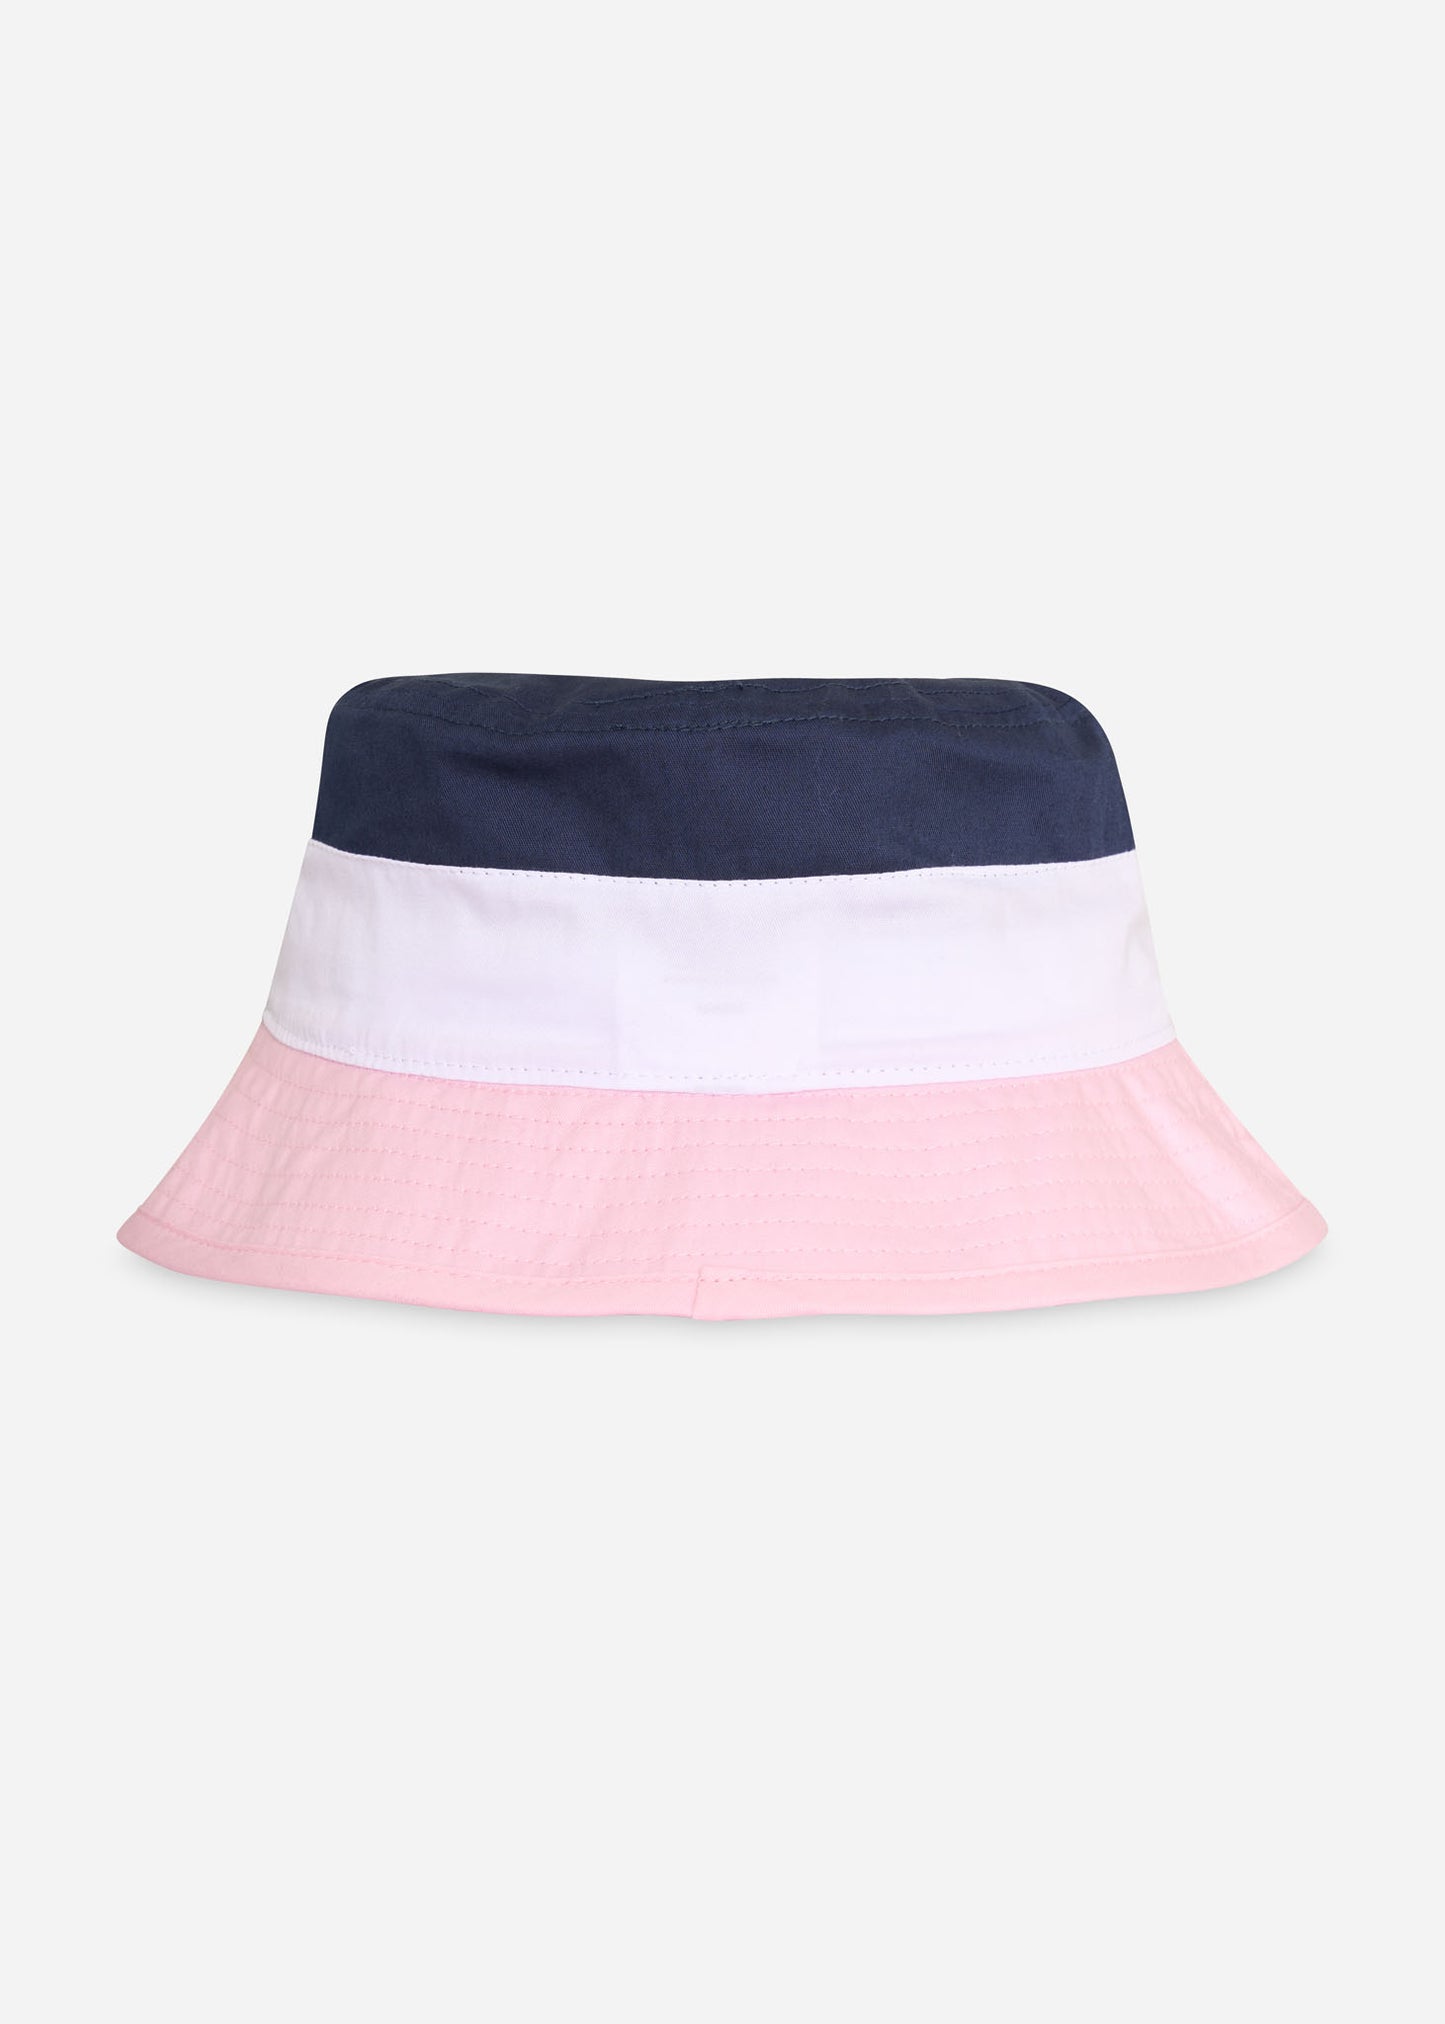 Savi bucket hat - navy